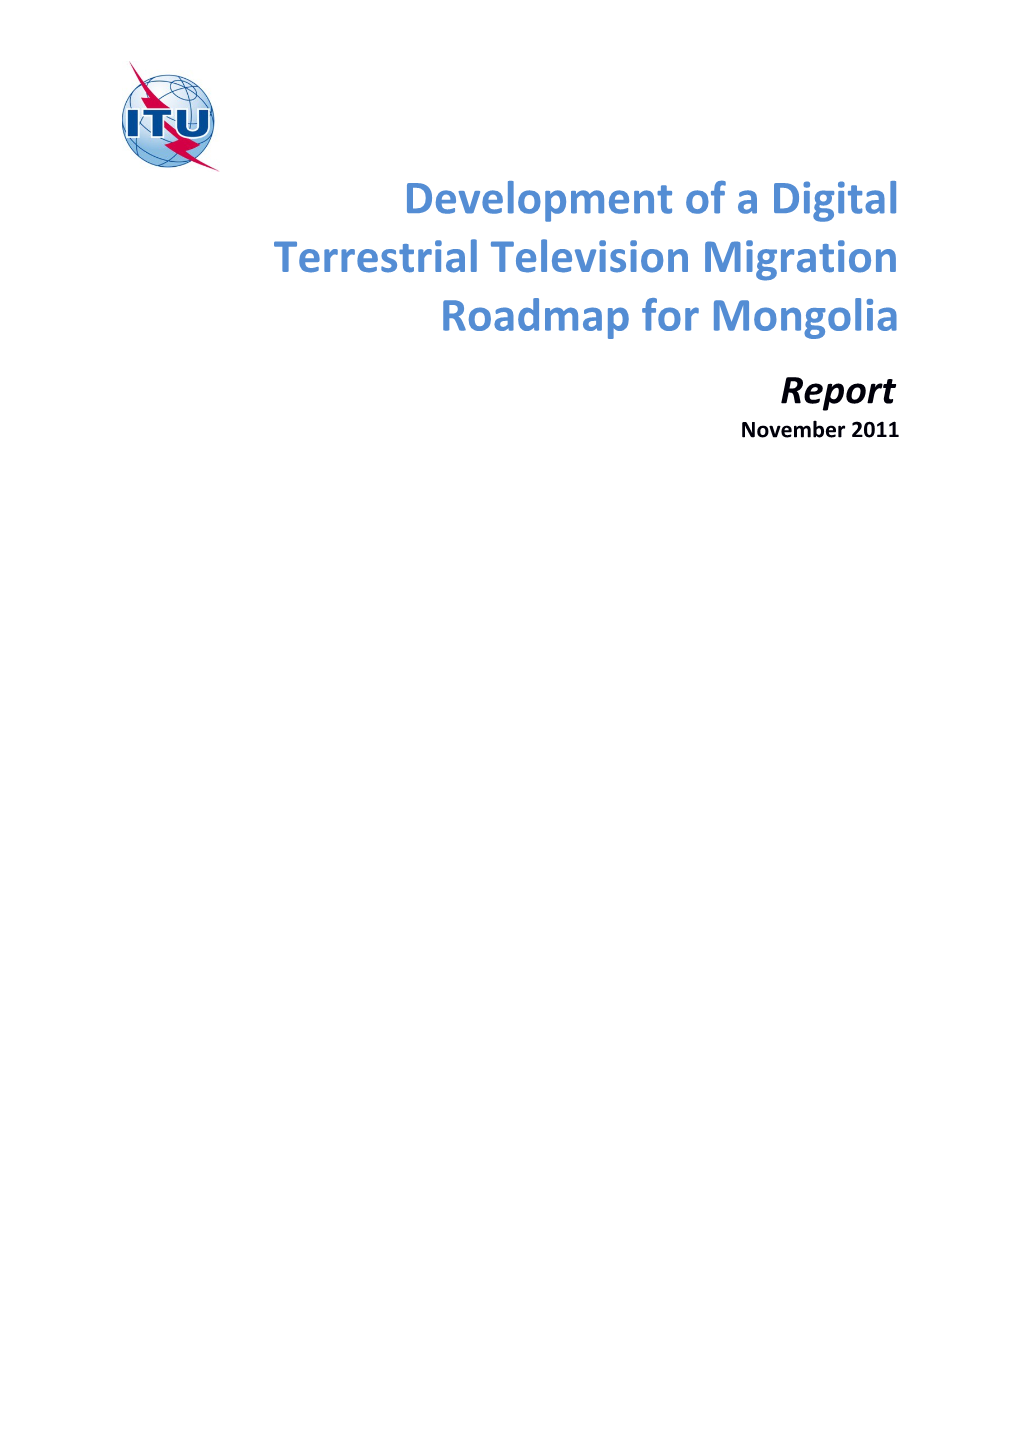 Development of a Digital Terrestrial Television Migration Roadmap for Mongolia